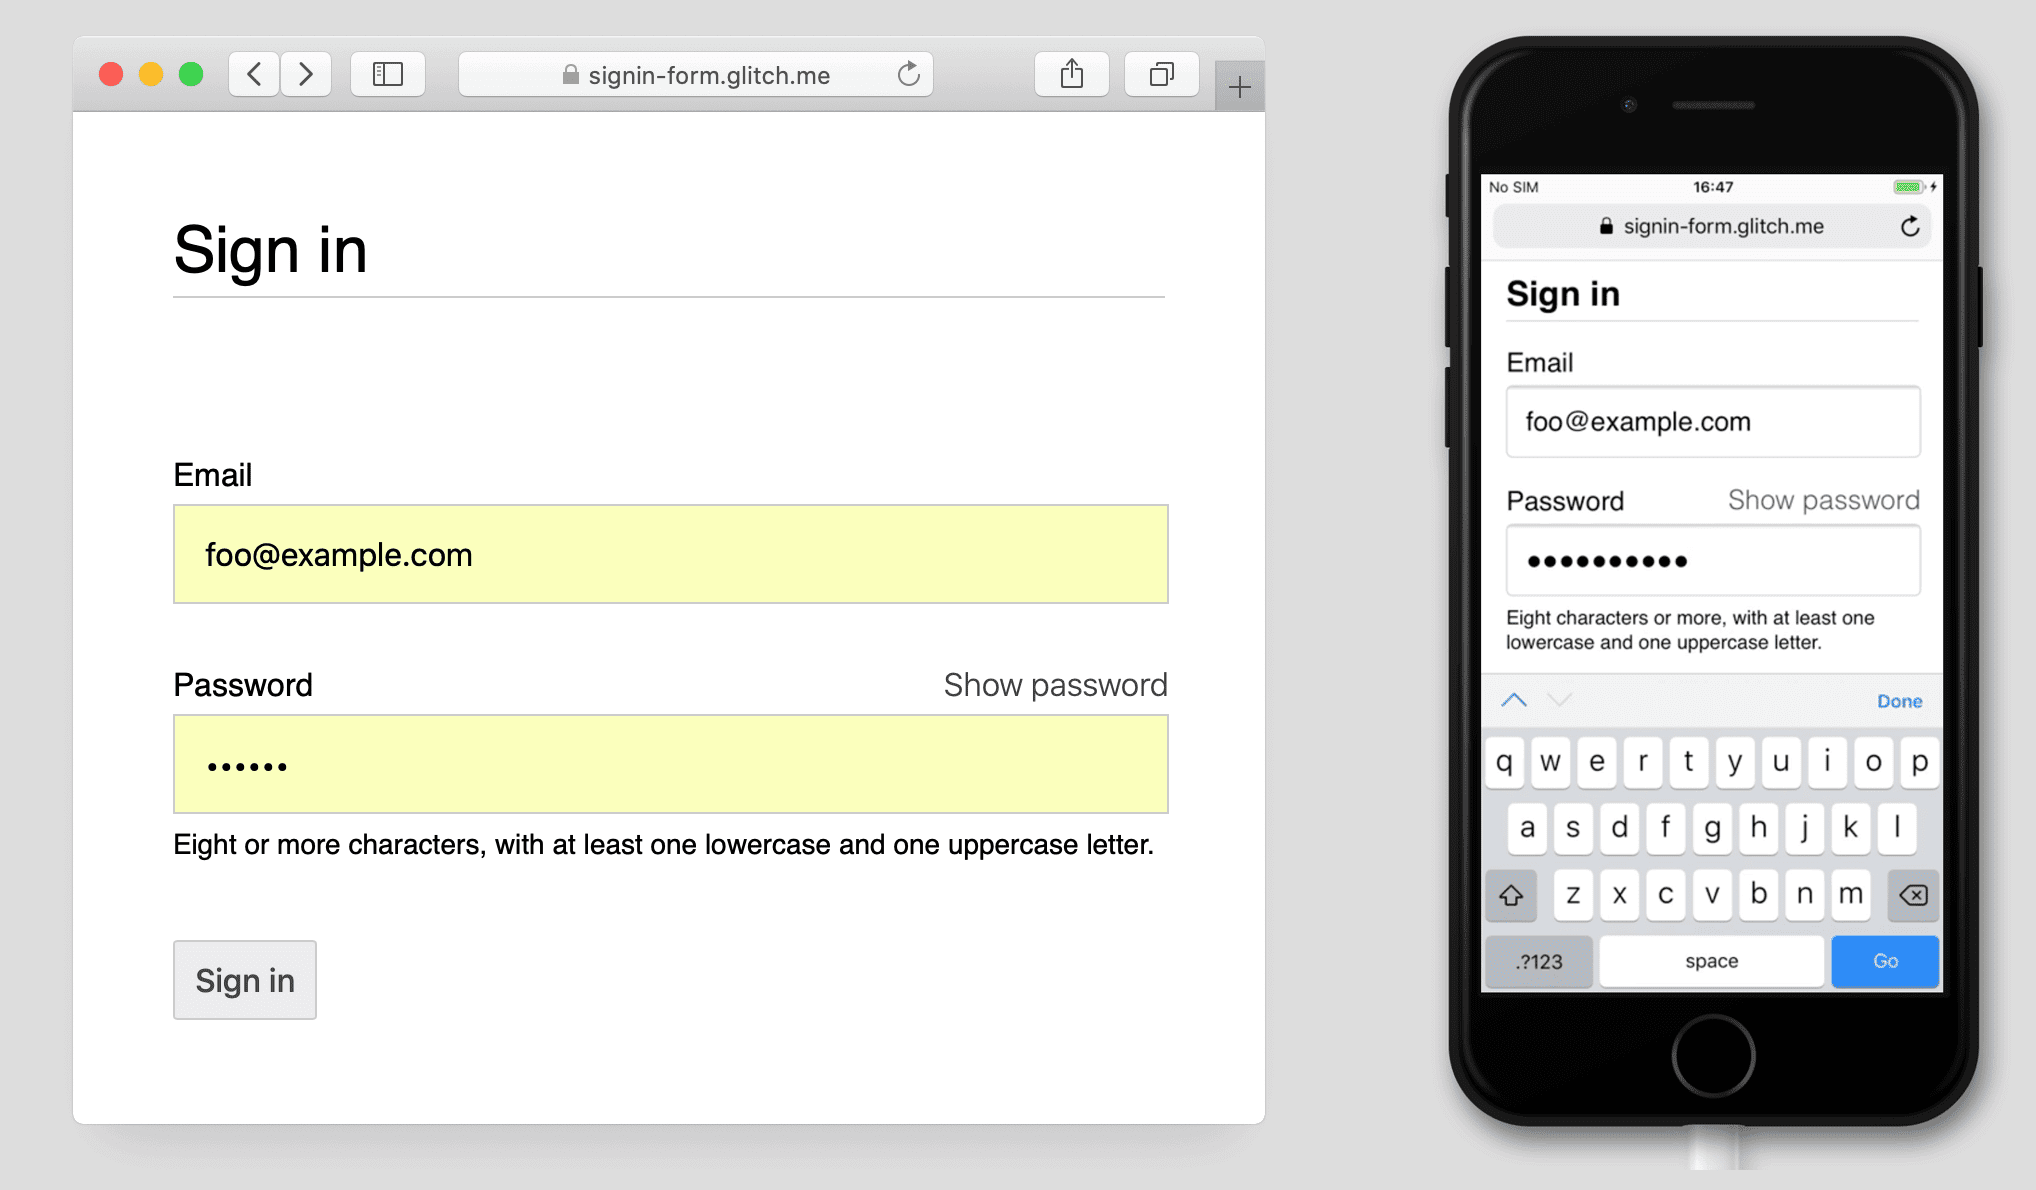 Mac 上的 Safari 和 iPhone 7 的登录表单屏幕截图，其中显示密码文本“button”。